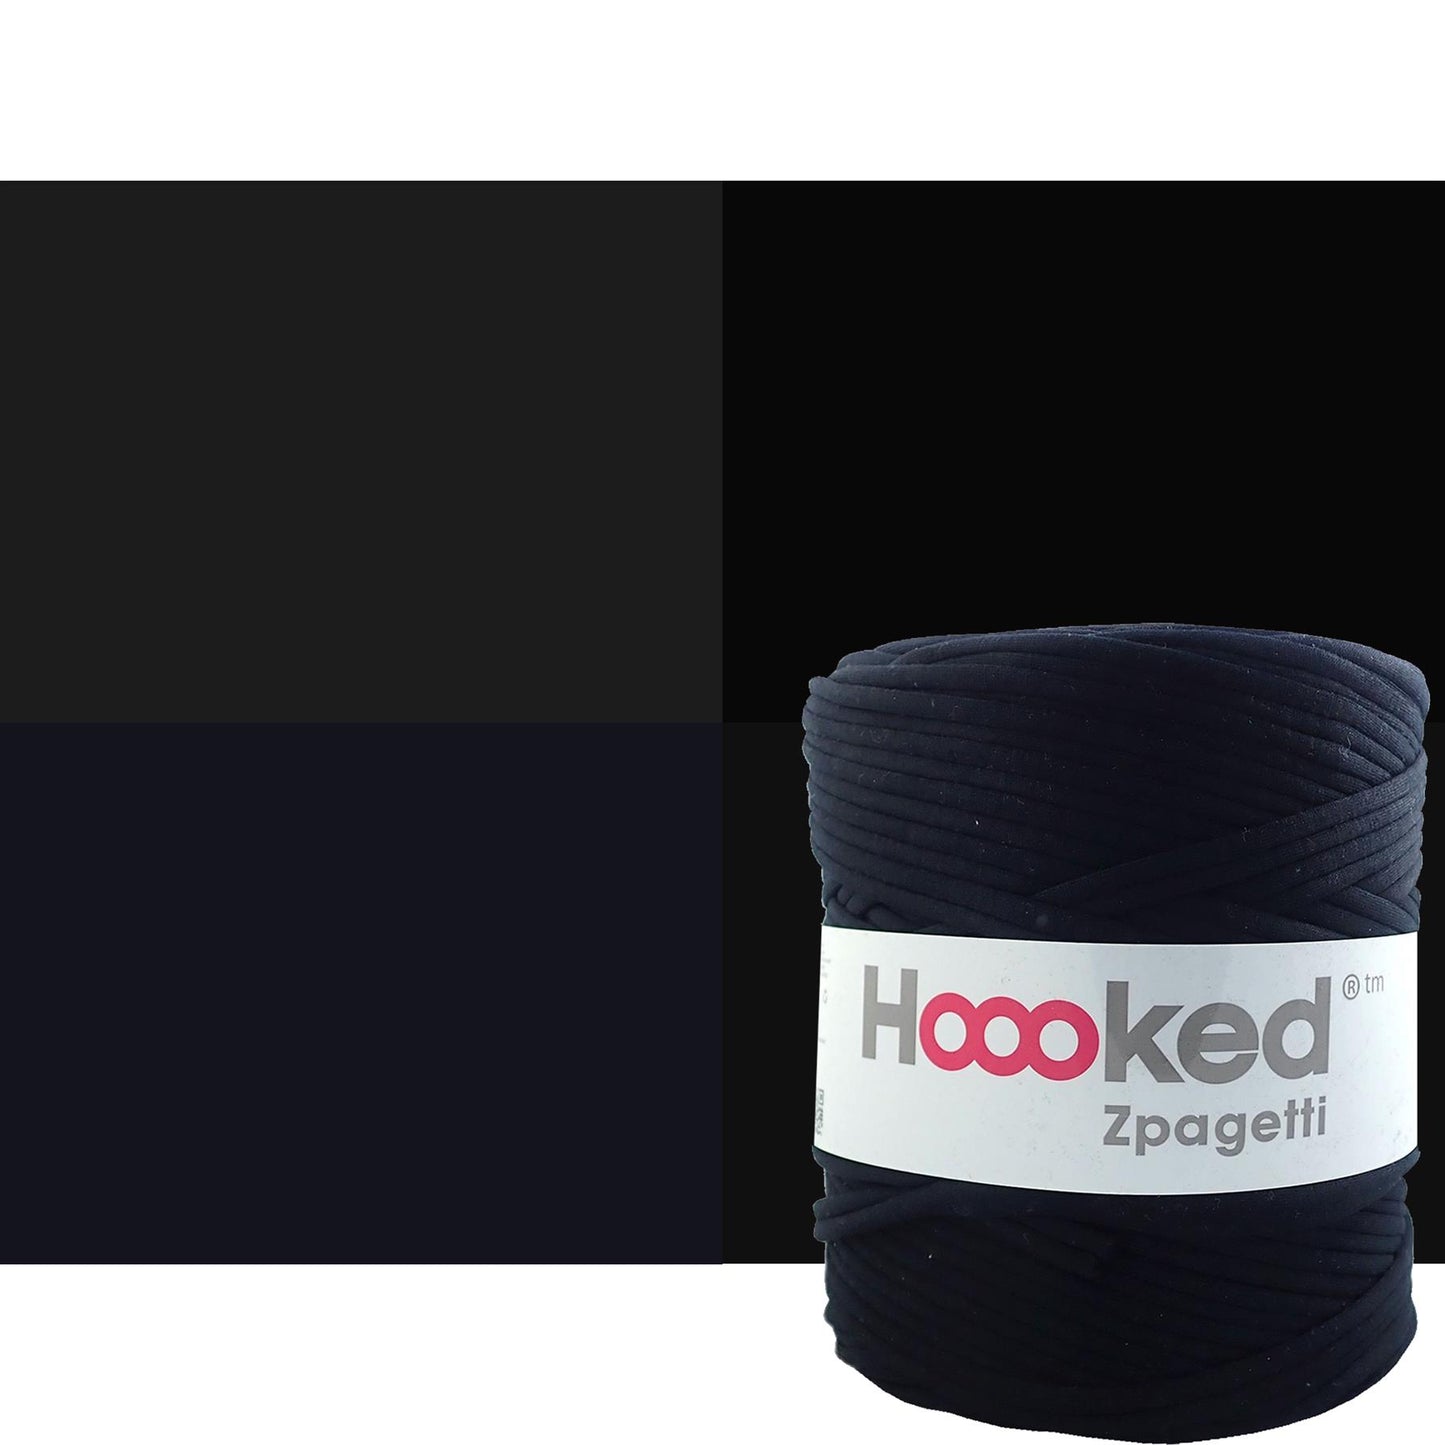 Hoooked Zpagetti Black Cotton T-Shirt Yarn - 120M 700g